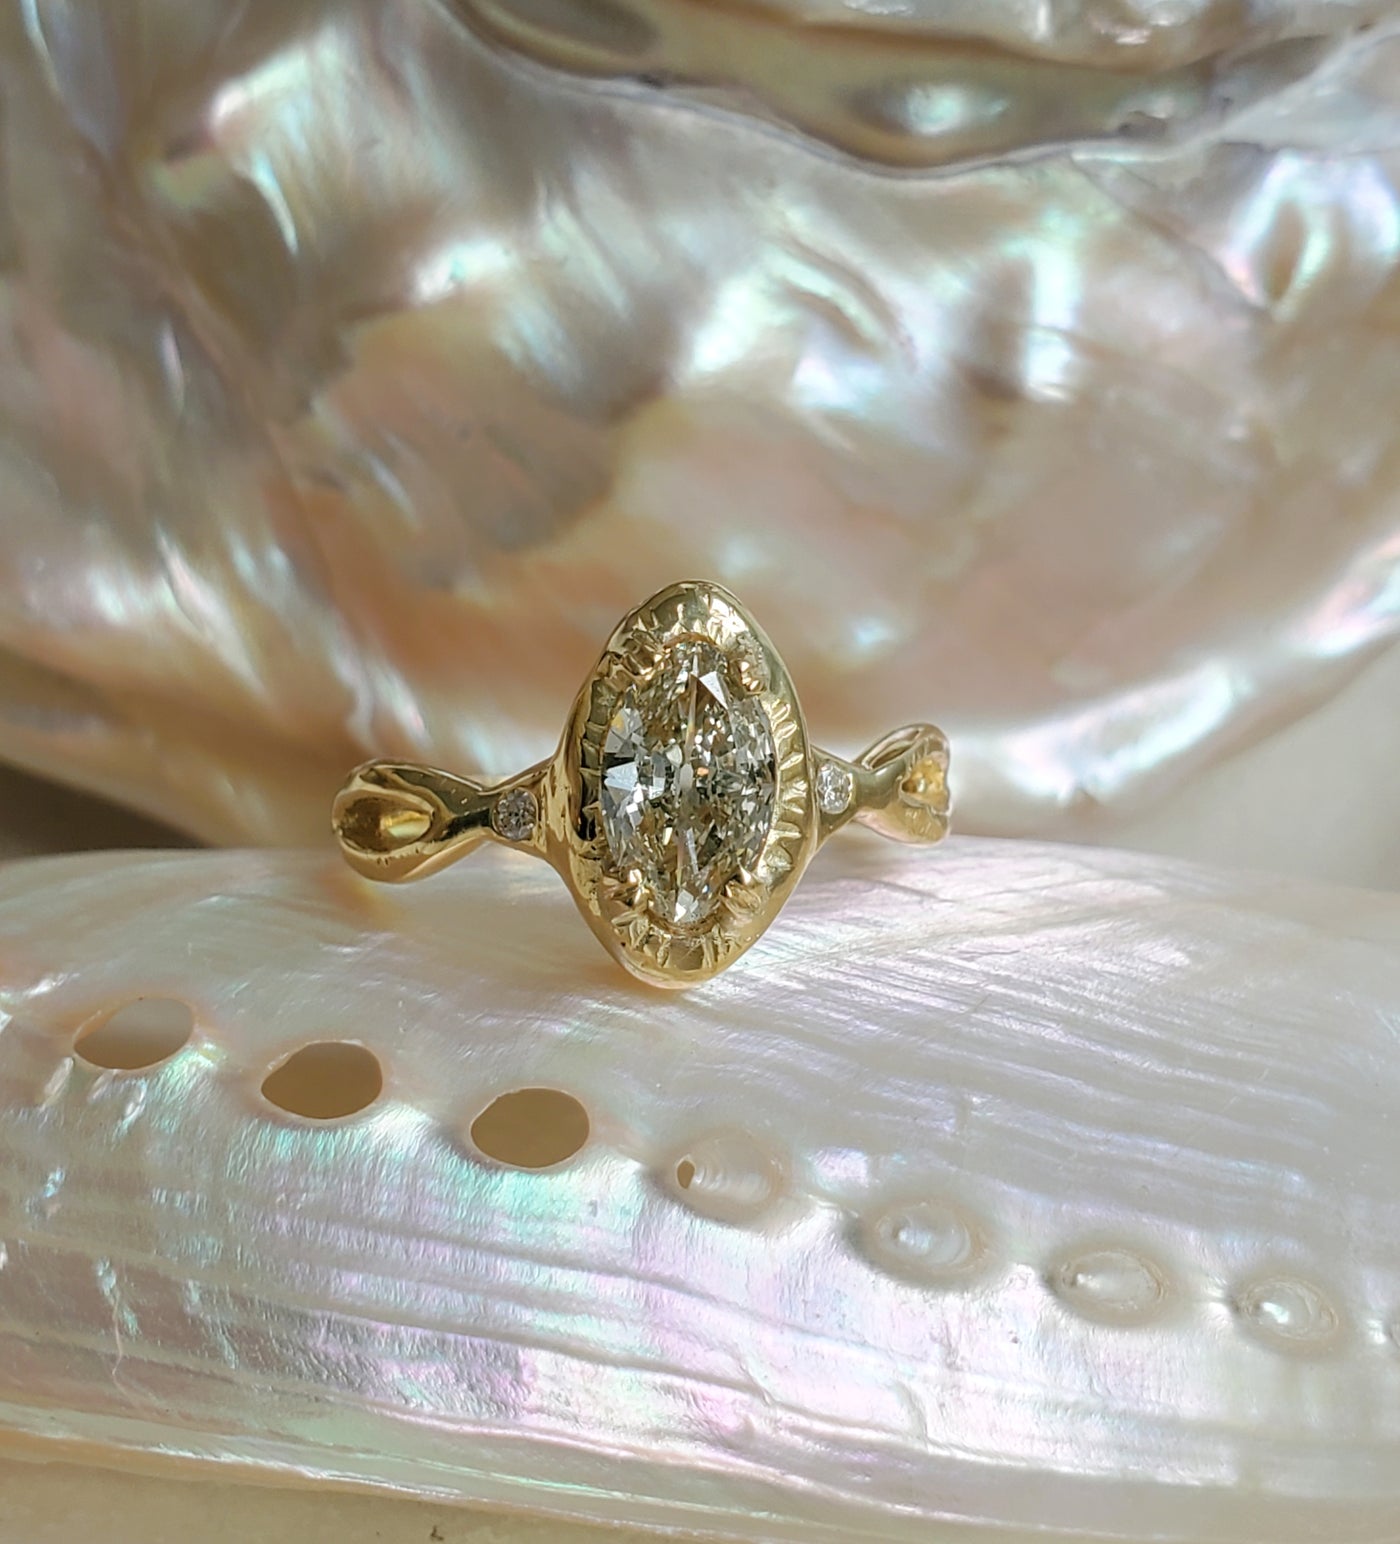 Antique Filigree Engagement Ring - .16ct Old European Cut Diamond Ring